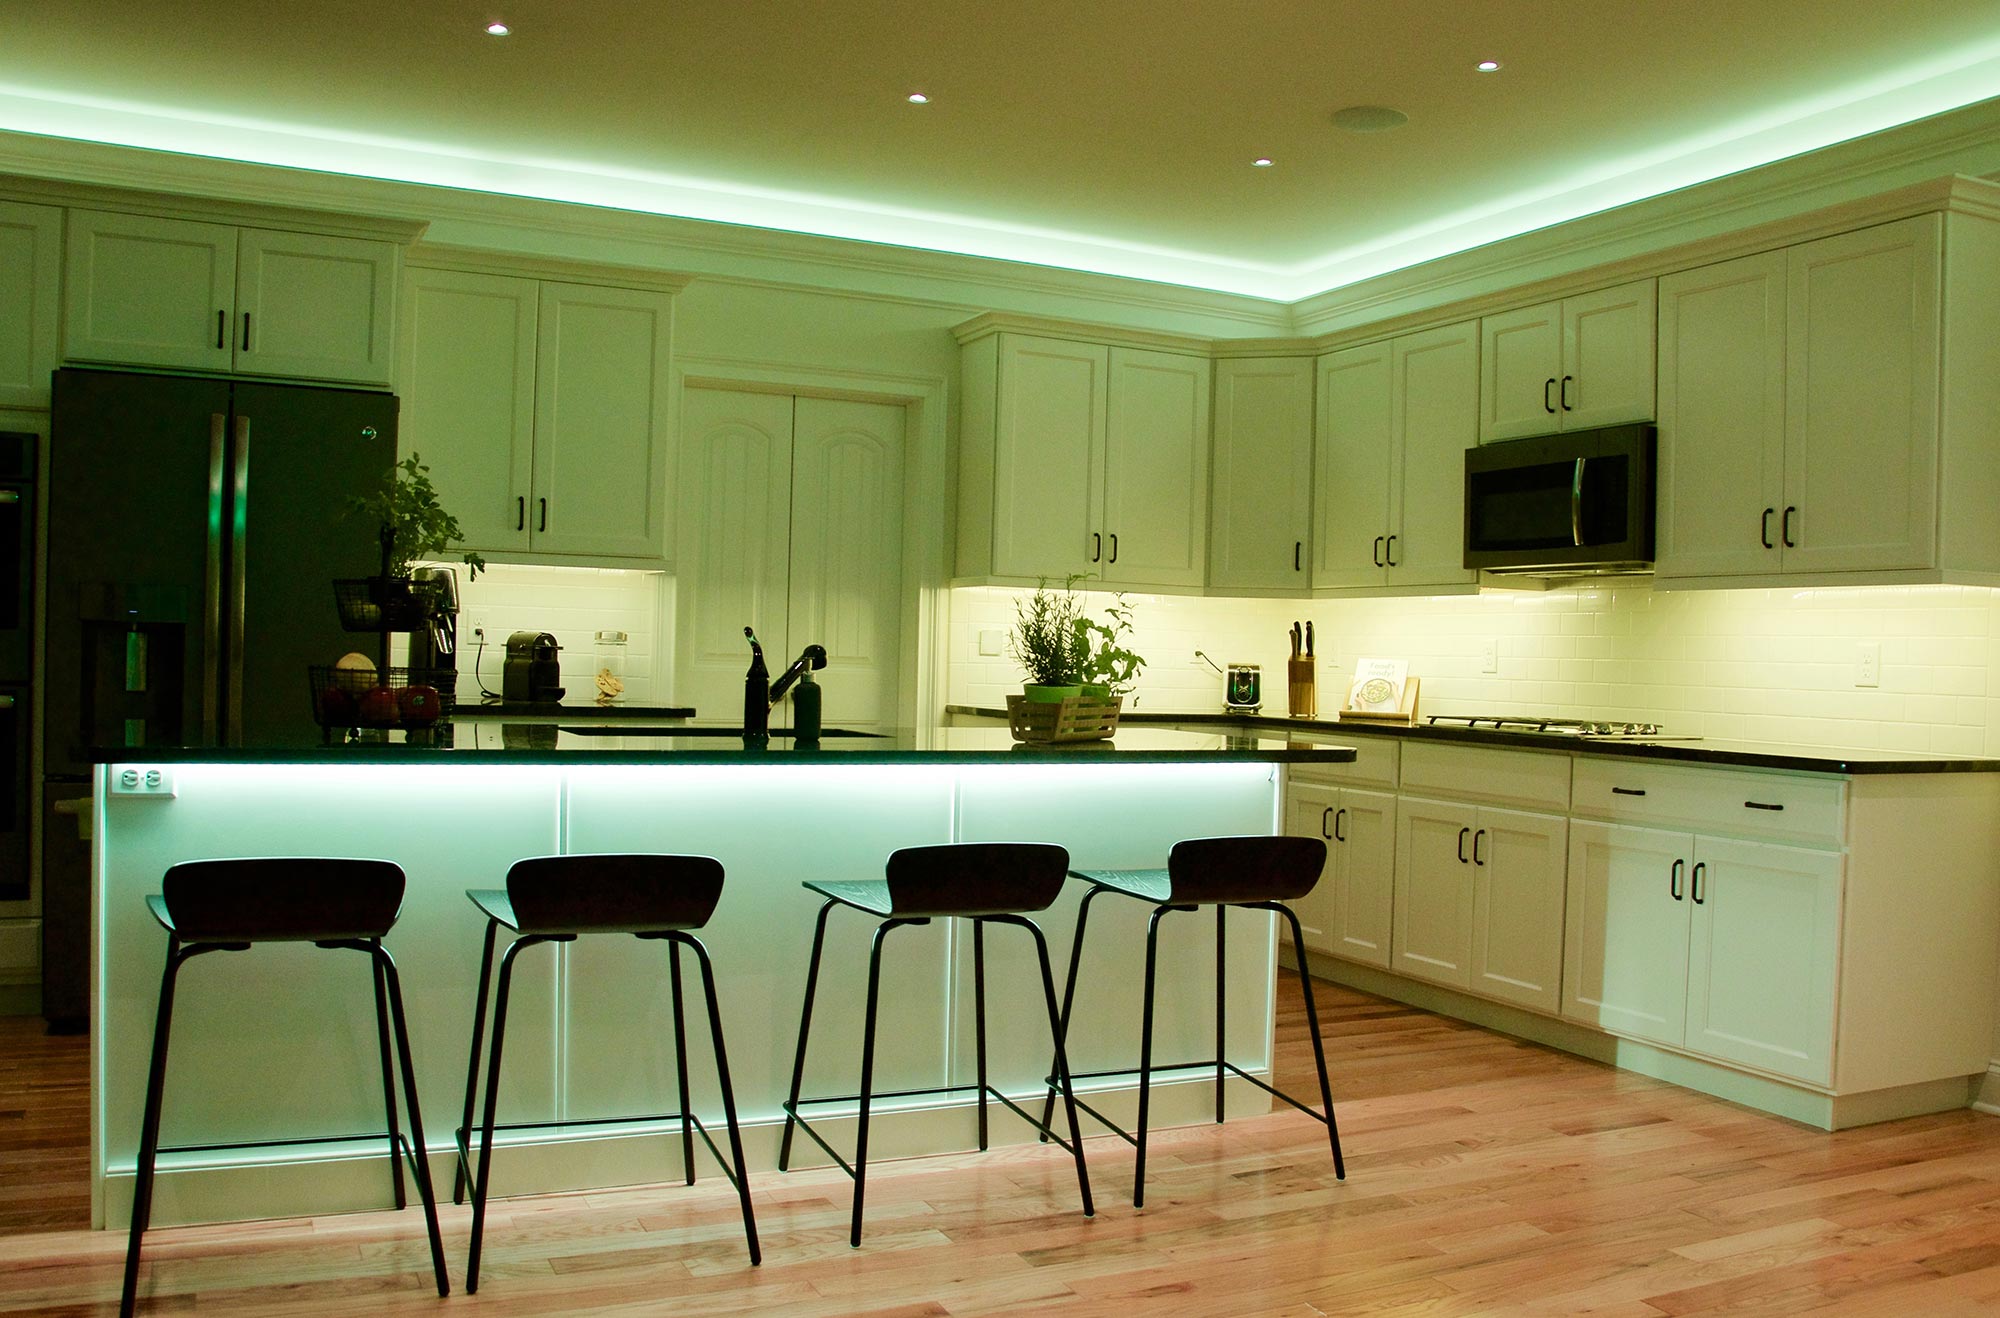 ambient lighting in kitchen